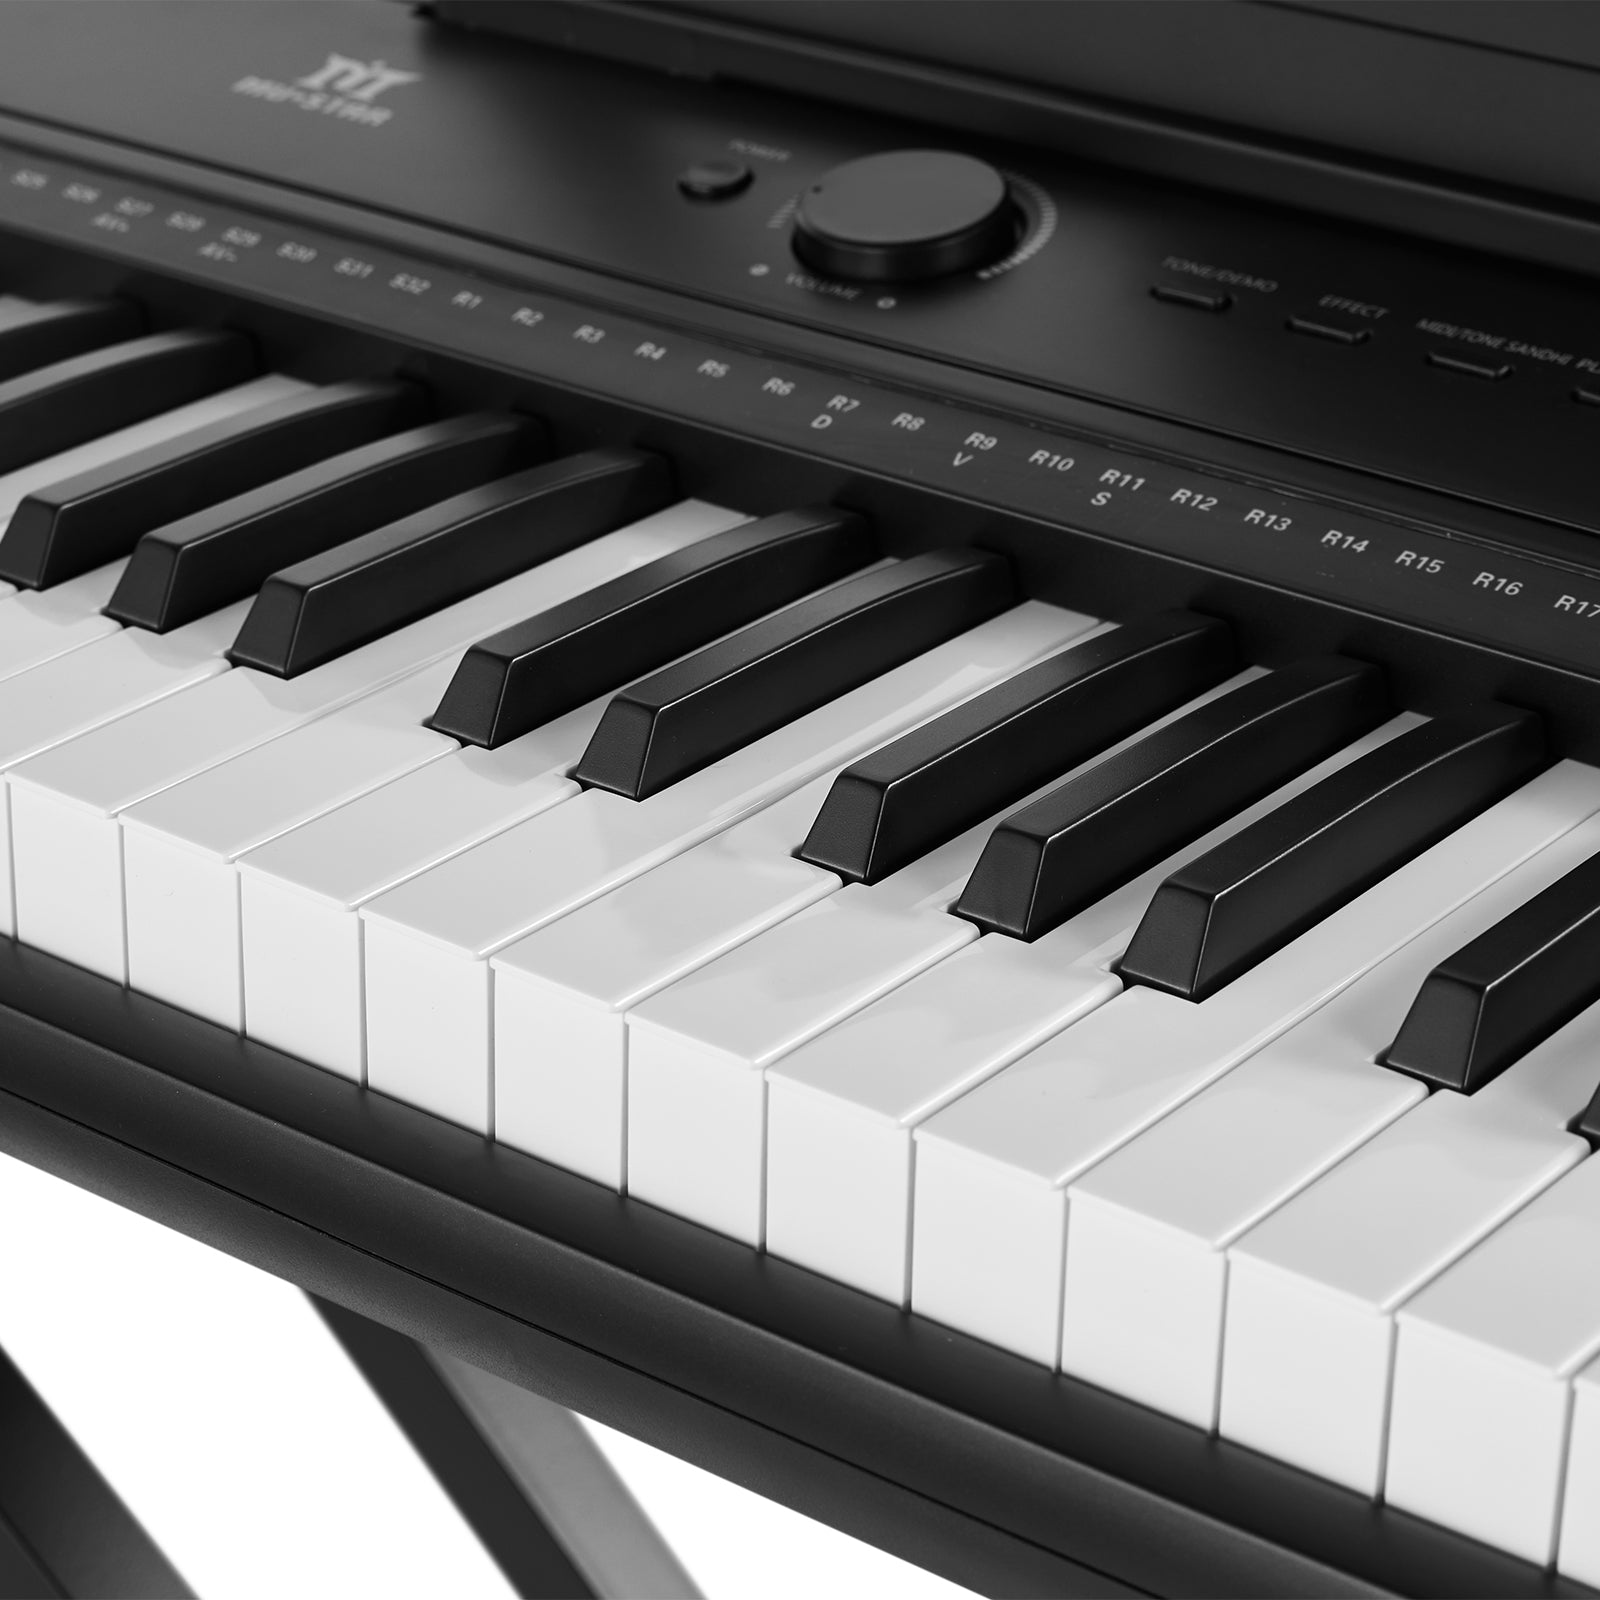 MUSTAR MEP-1100, 88 keys Digital Piano, Semi Weighted Keyboard Piano